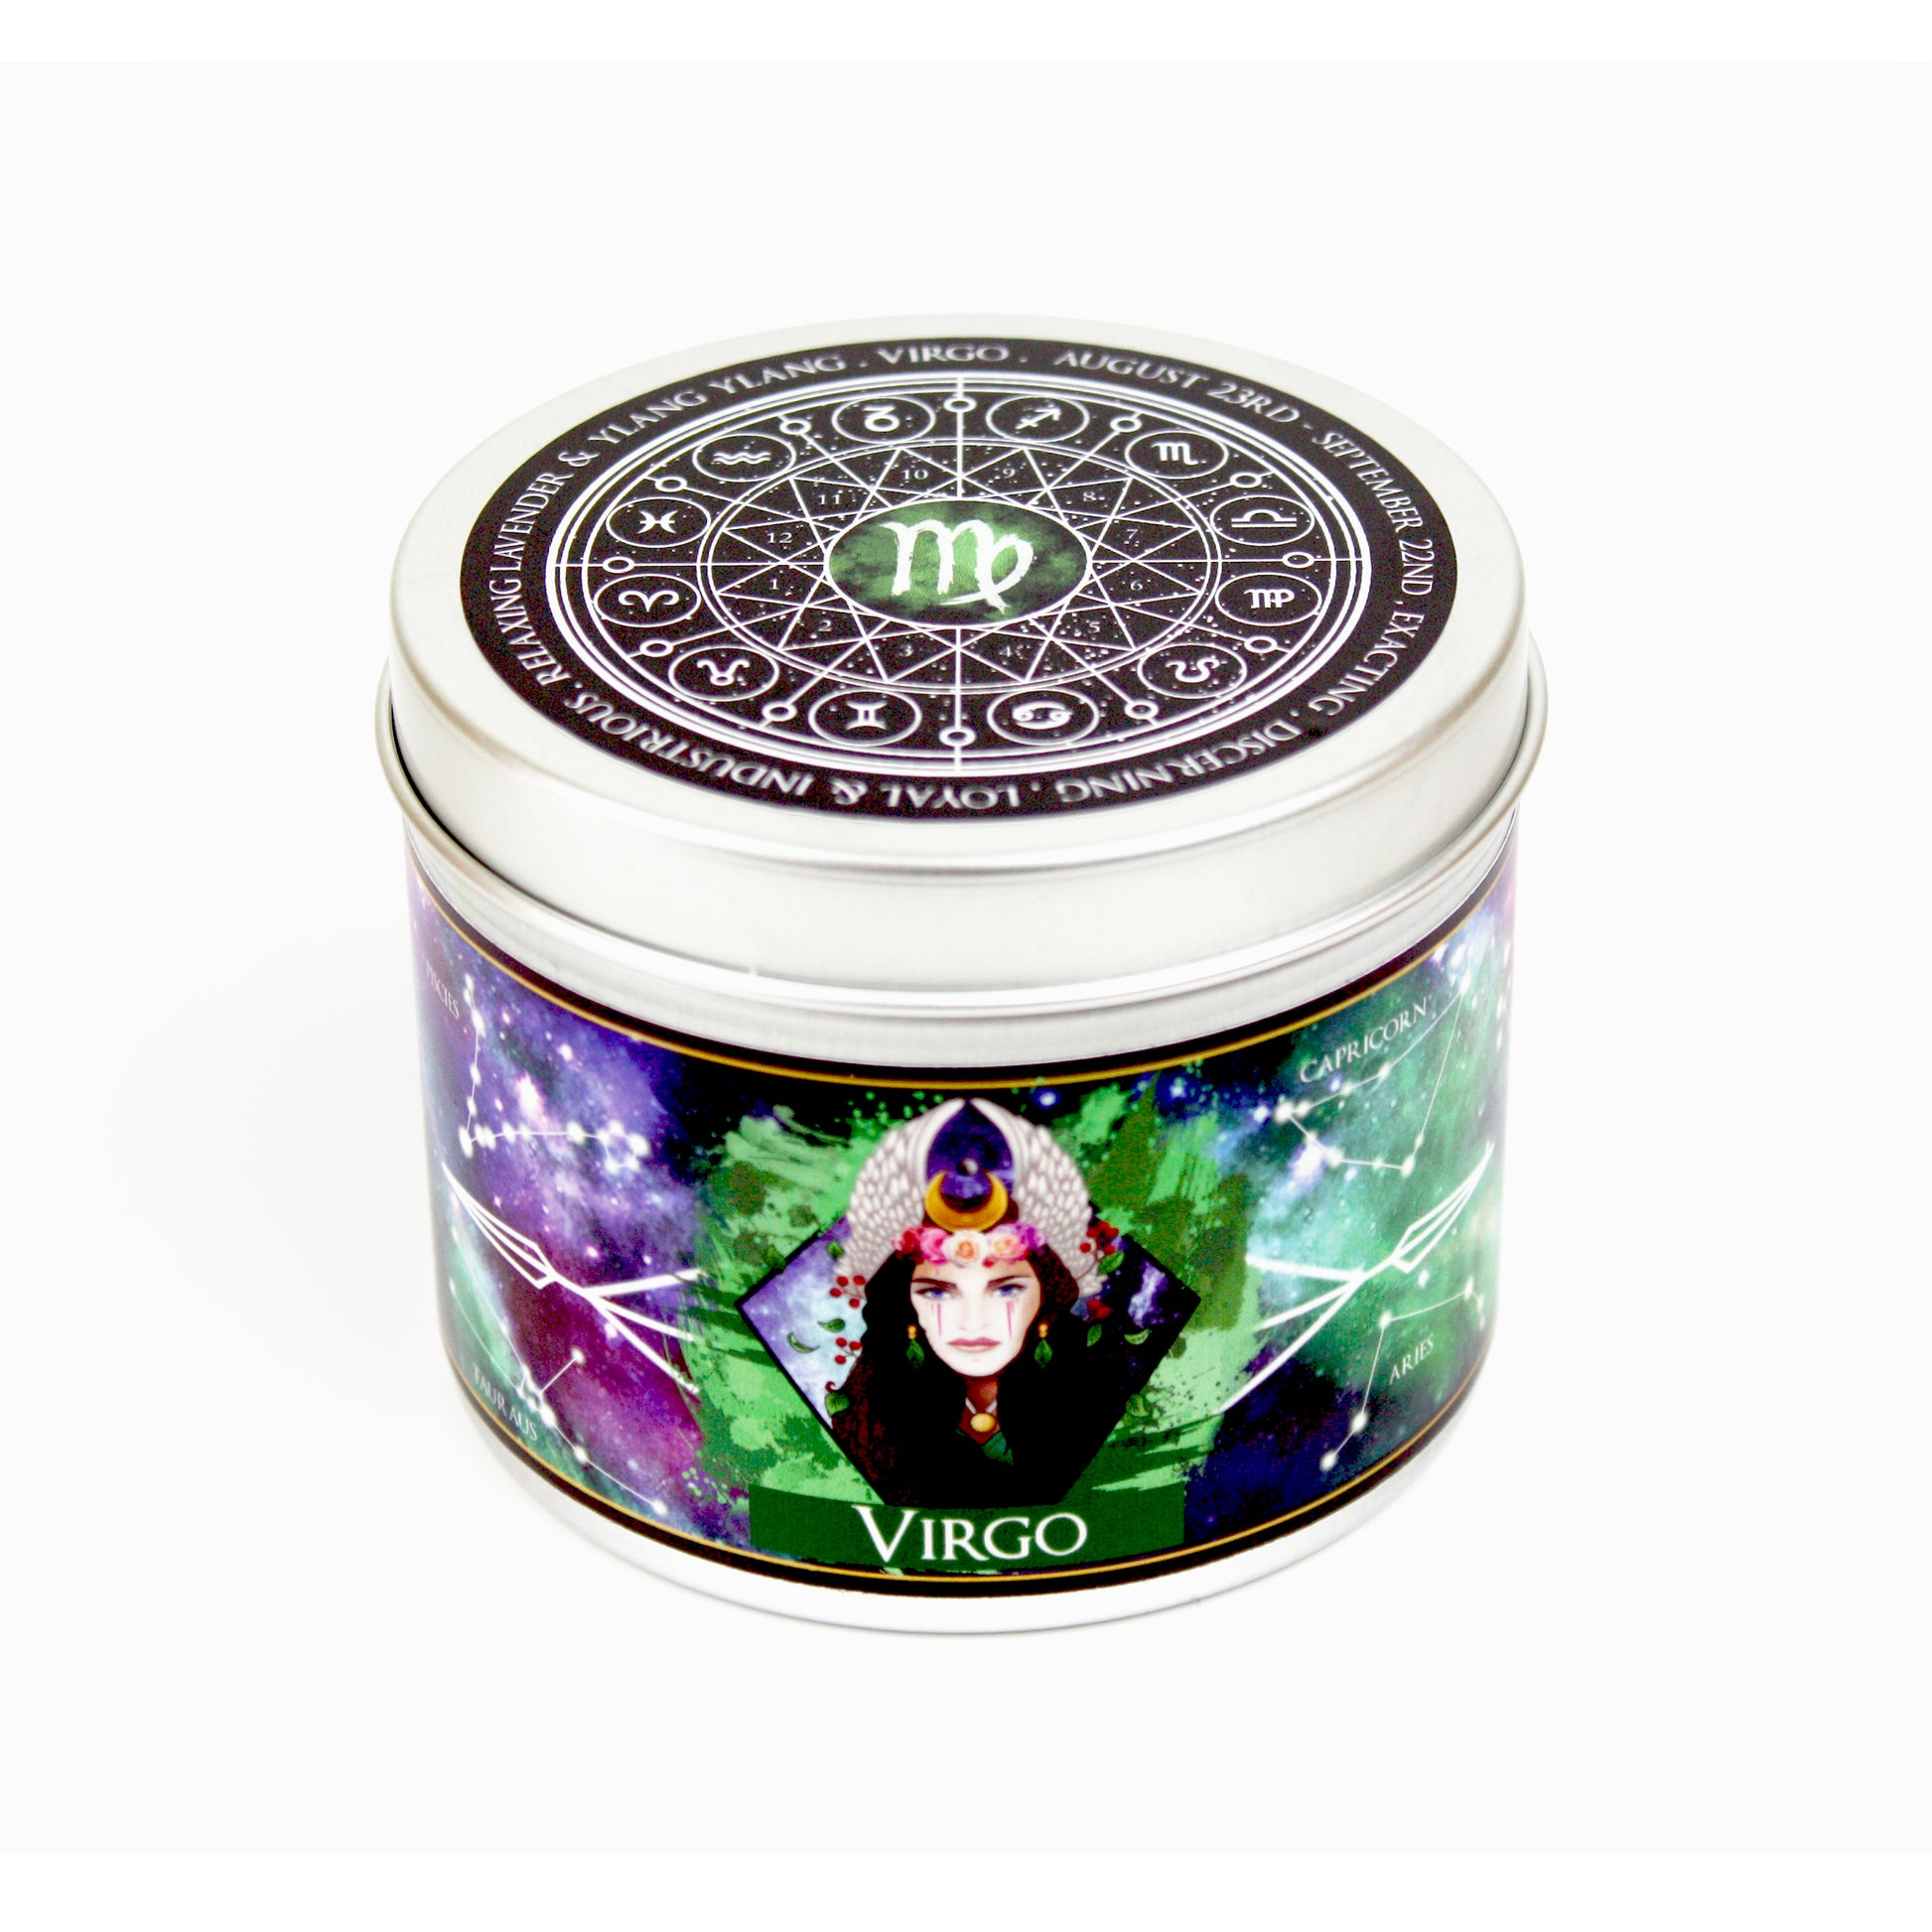 Virgo zodiac horoscope scented candle by Happy Piranha.